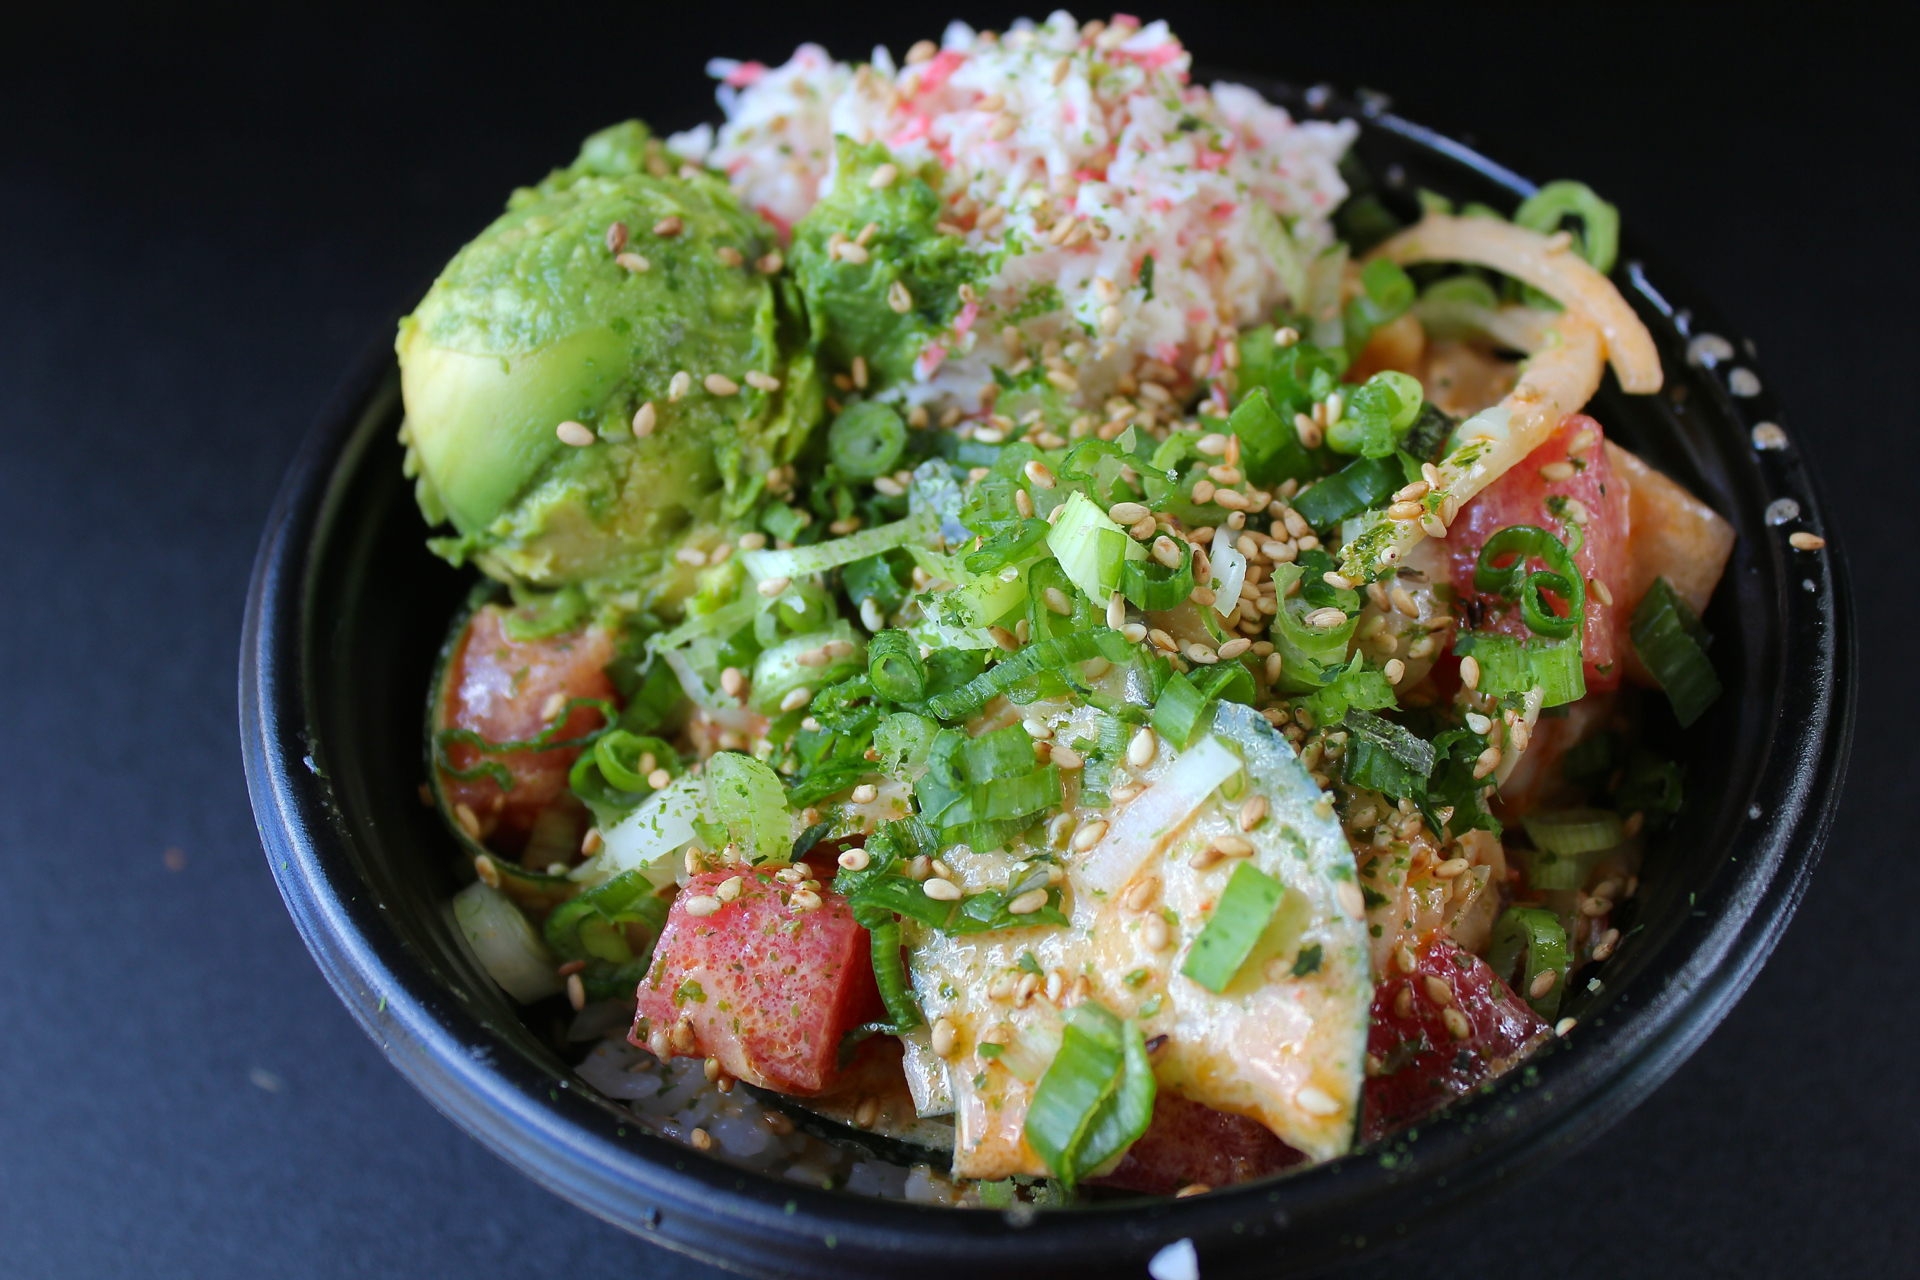 Ahi tuna and yellowtail with cucumbers, green onions, crab salad and avocado at Poki Bowl.